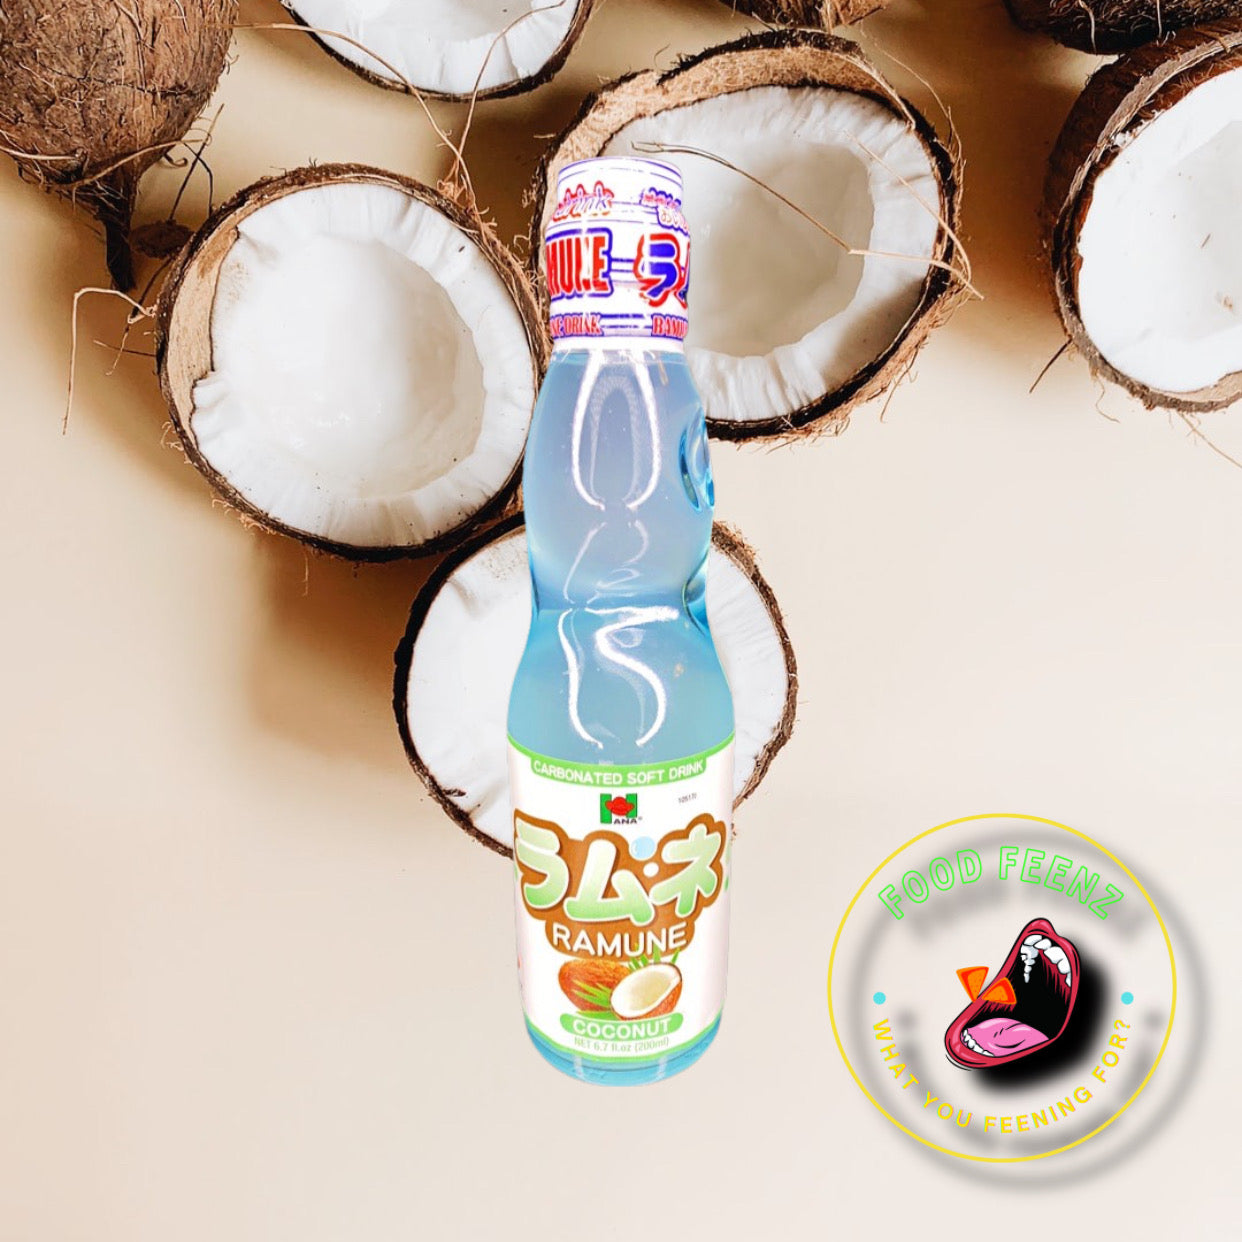 Ramune Coconut Flavored Drink (Japan)